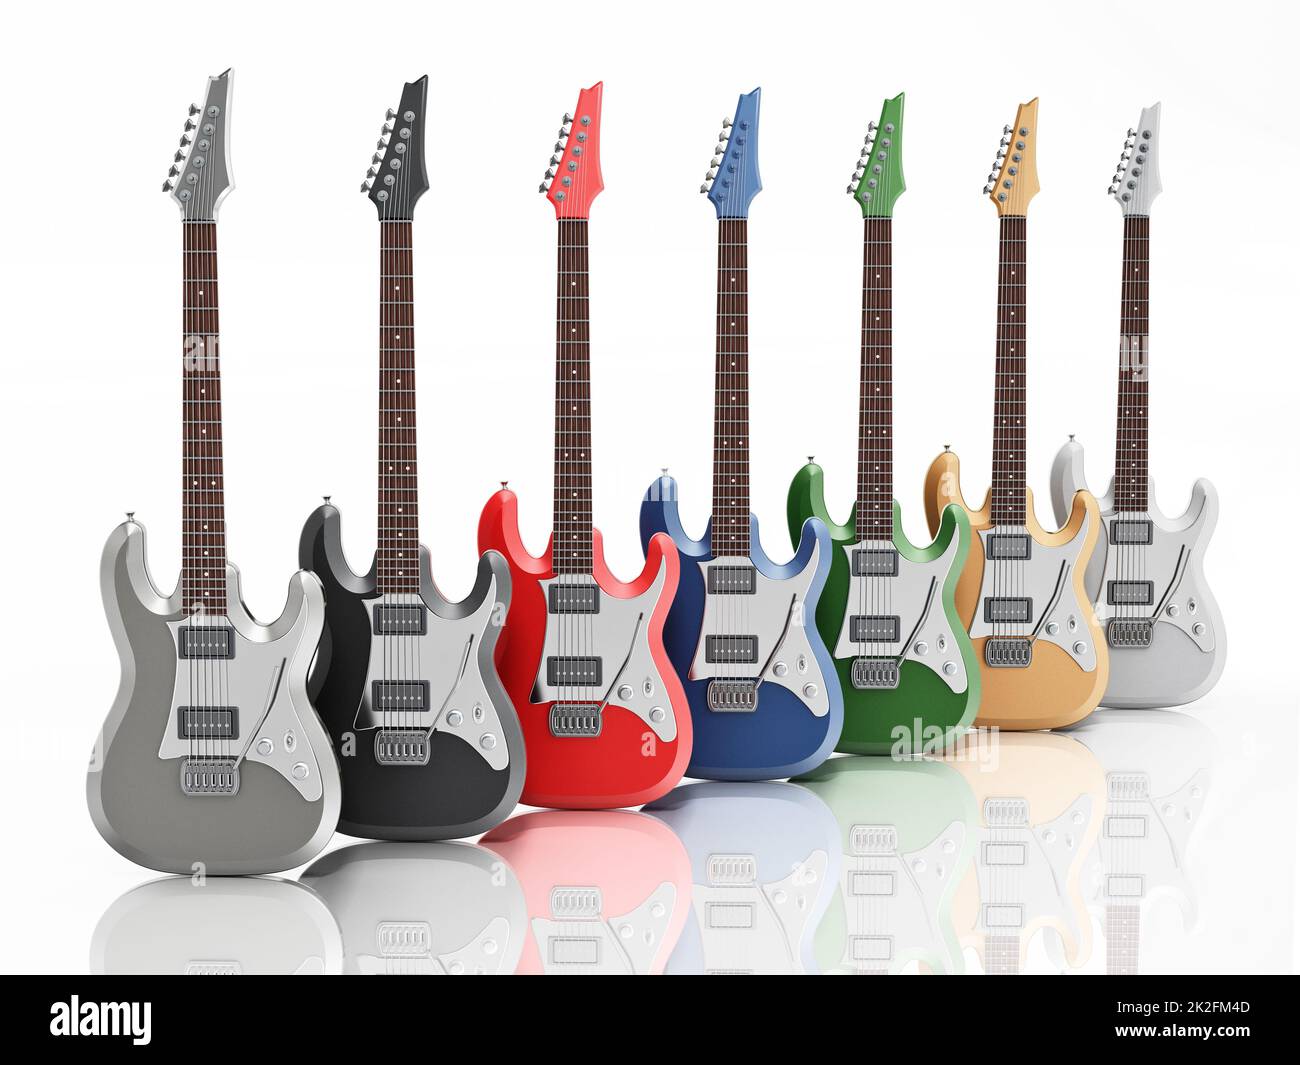 Bunte e gitarren -Fotos und -Bildmaterial in hoher Auflösung – Alamy